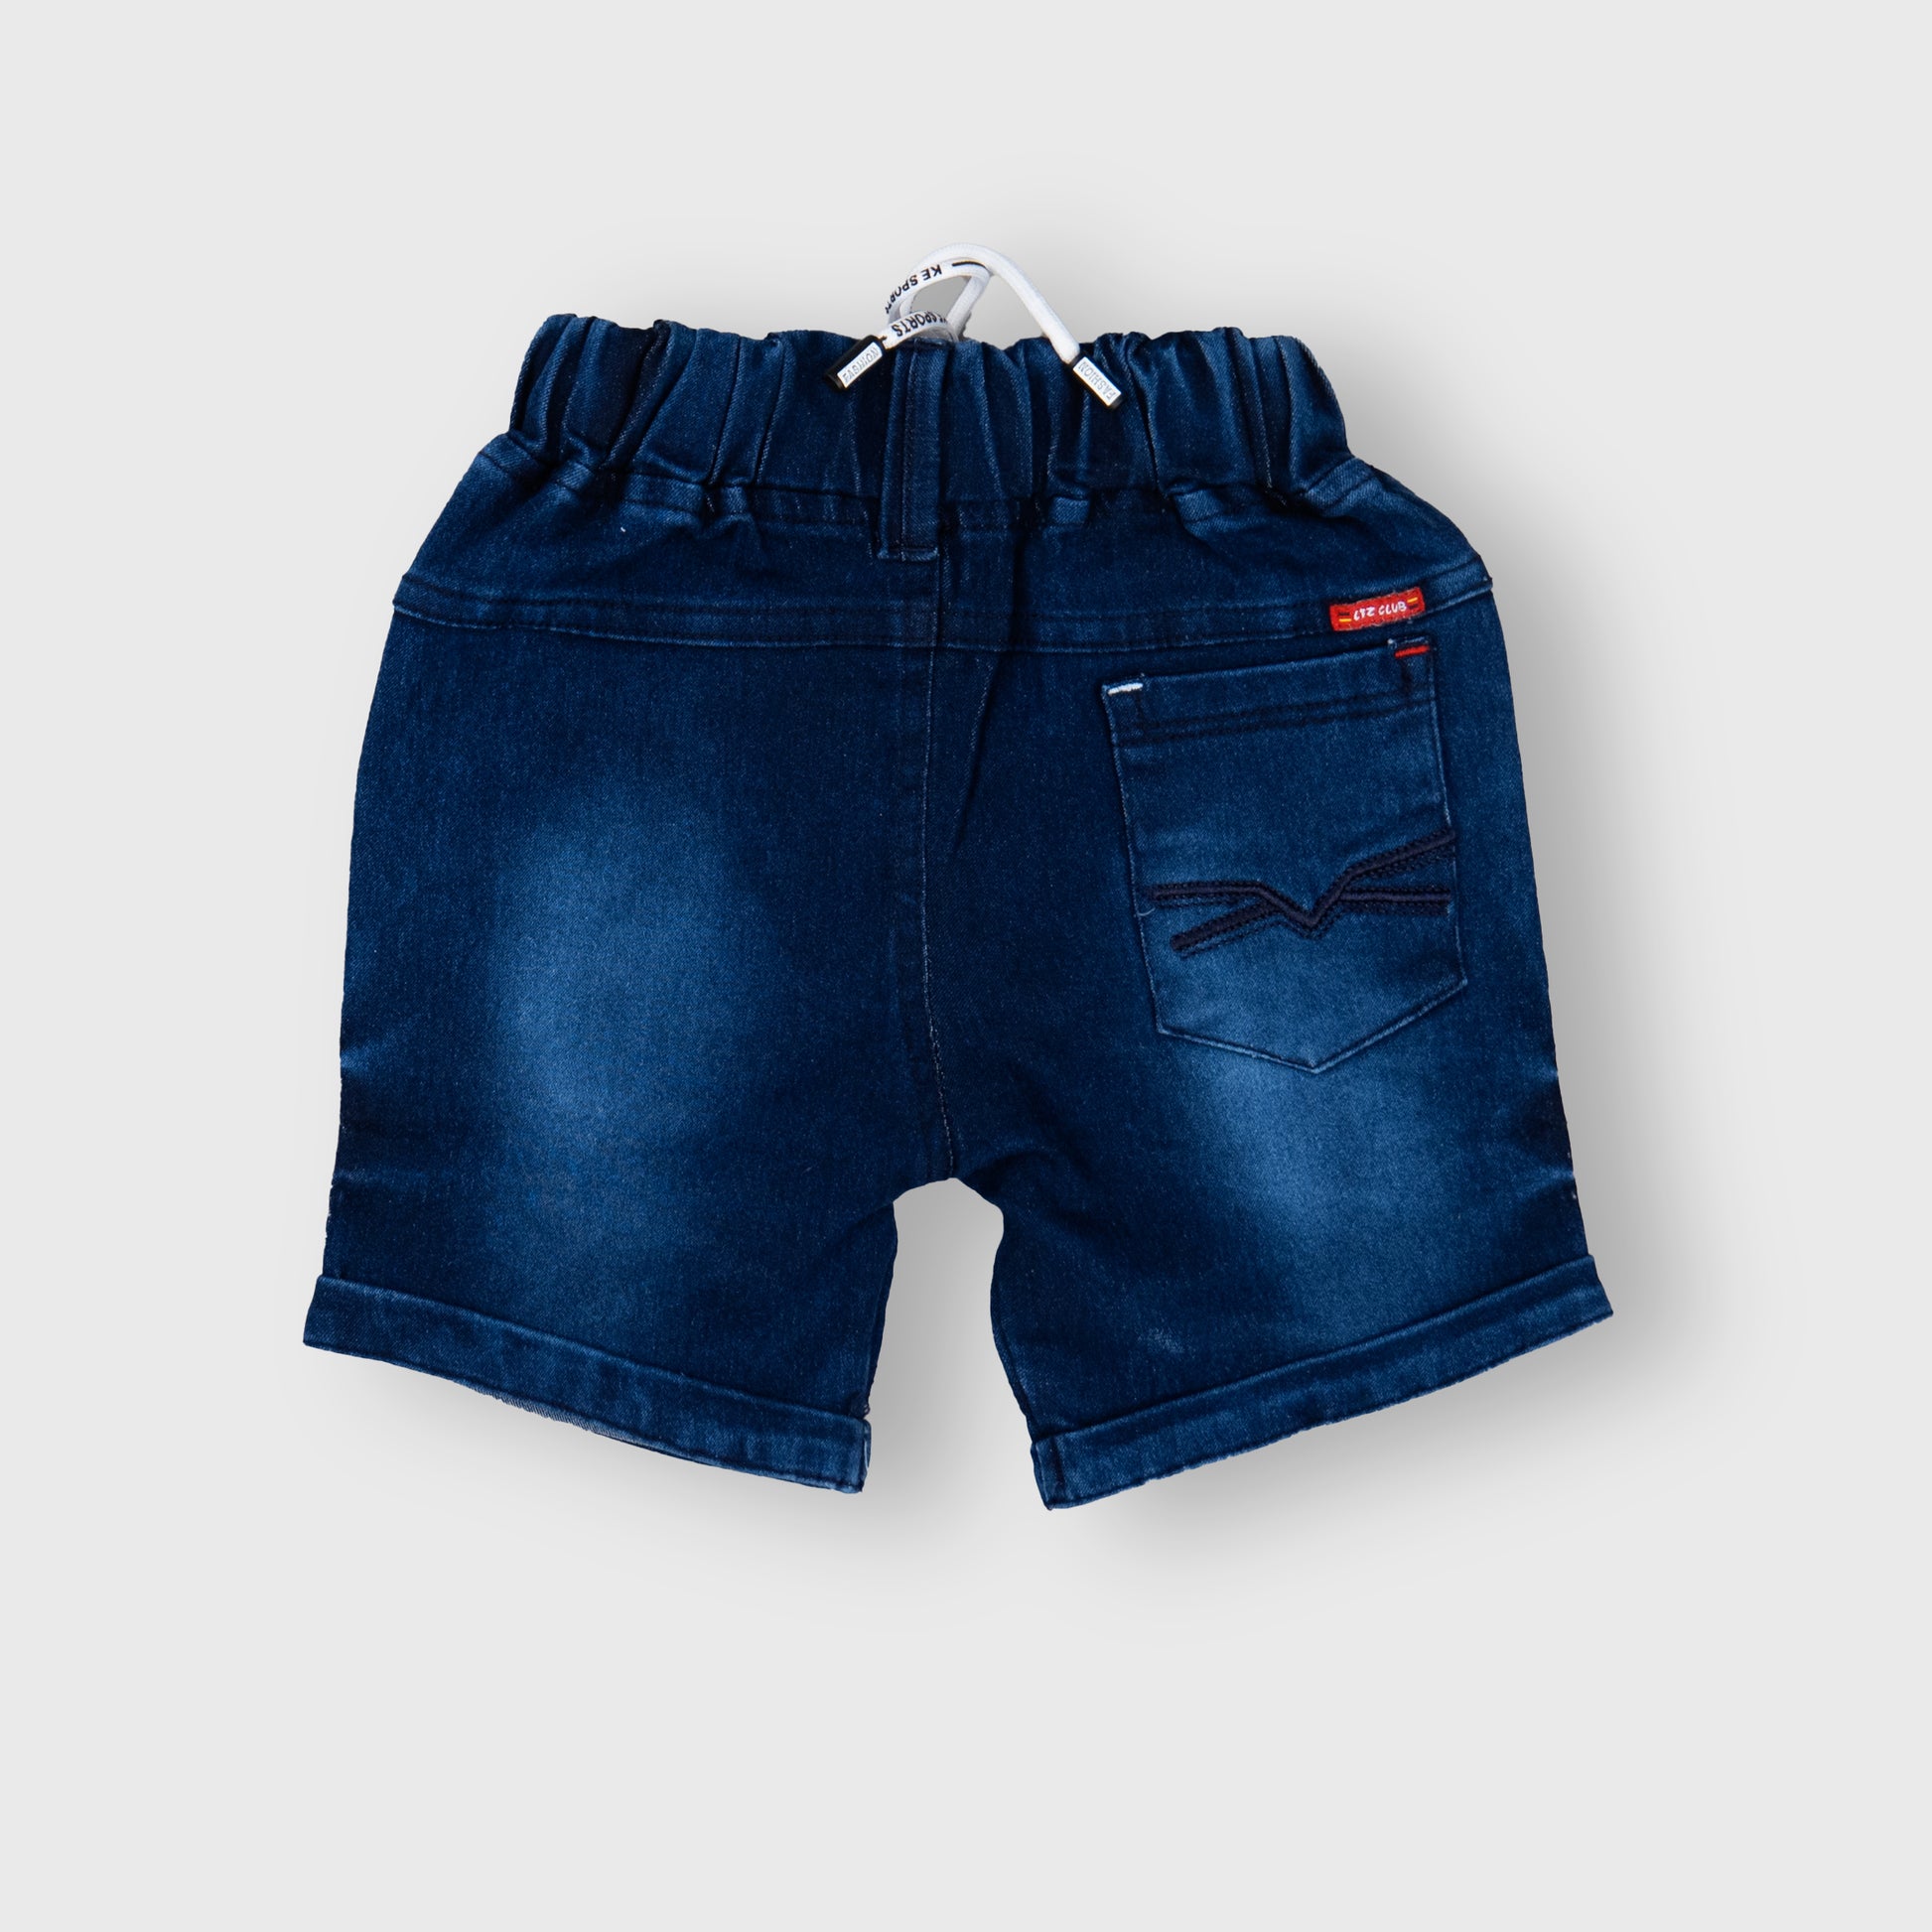 Shop LTZ Clothing Sets For Boys (1-6 Years) 2173H Aqua Online | Baby Palms